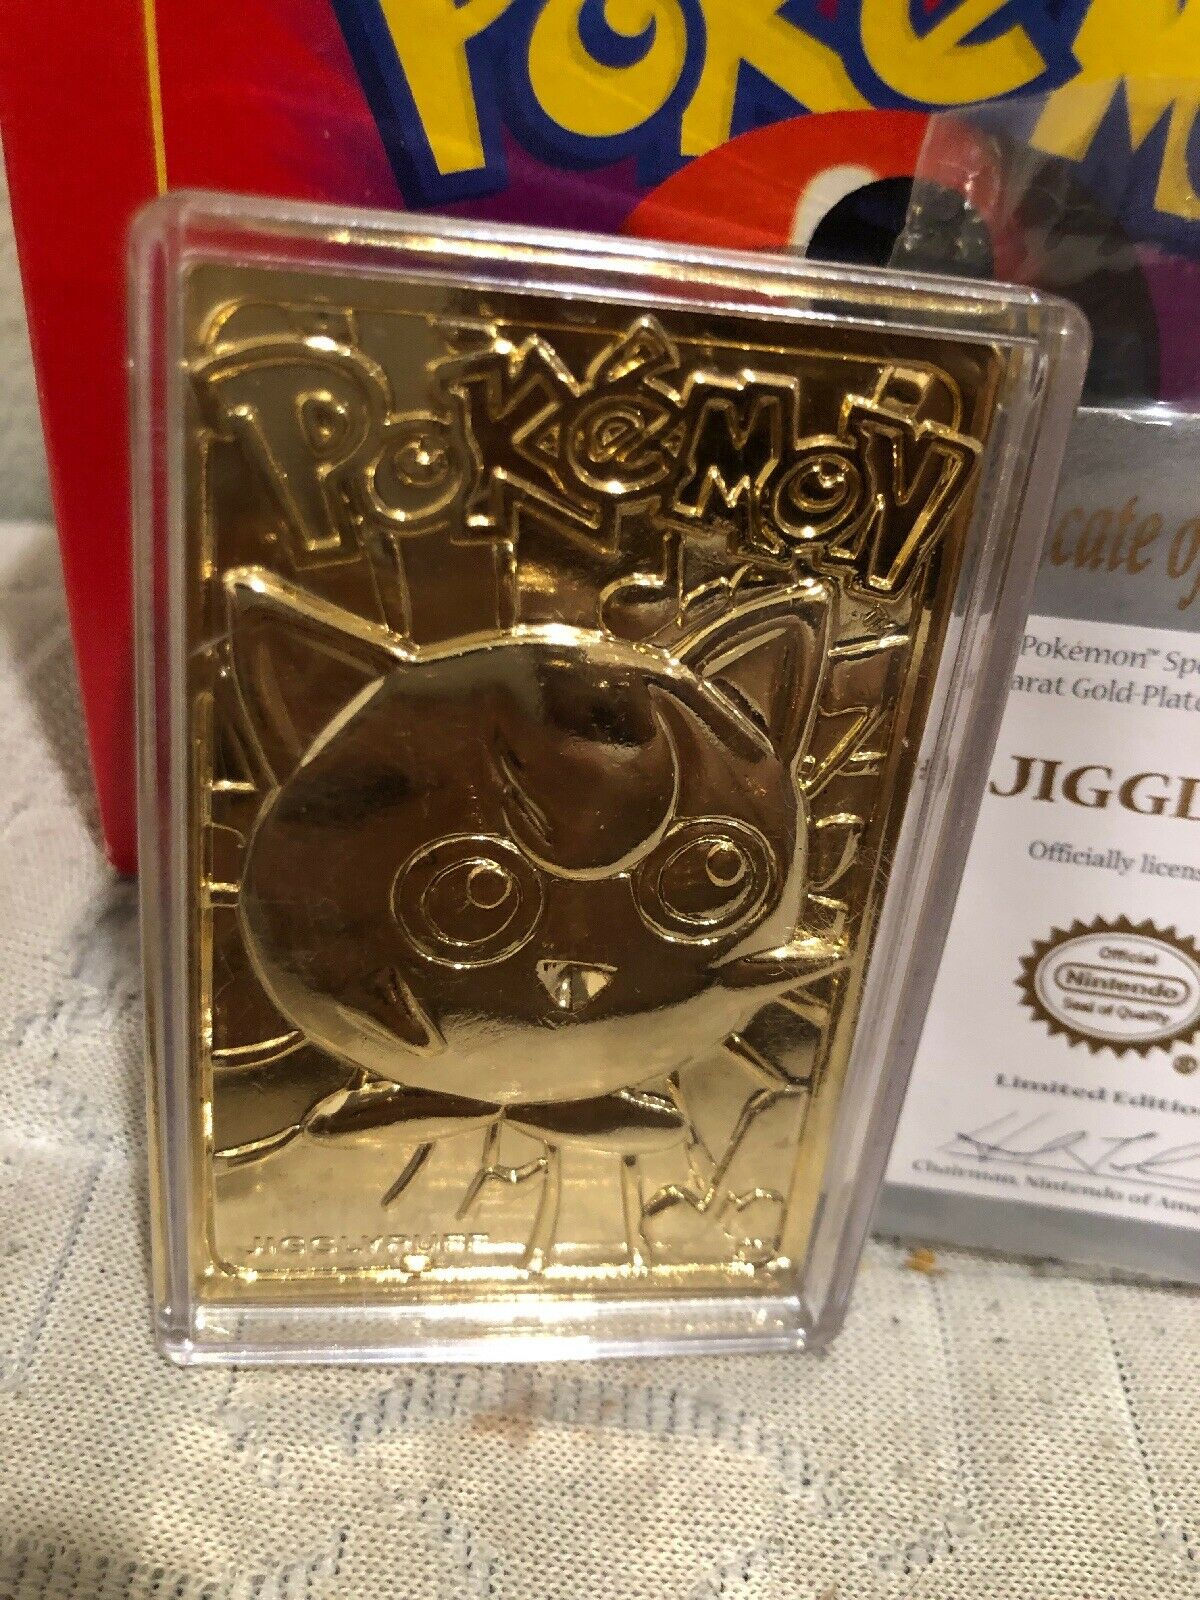 23k gold pokemon cards value.